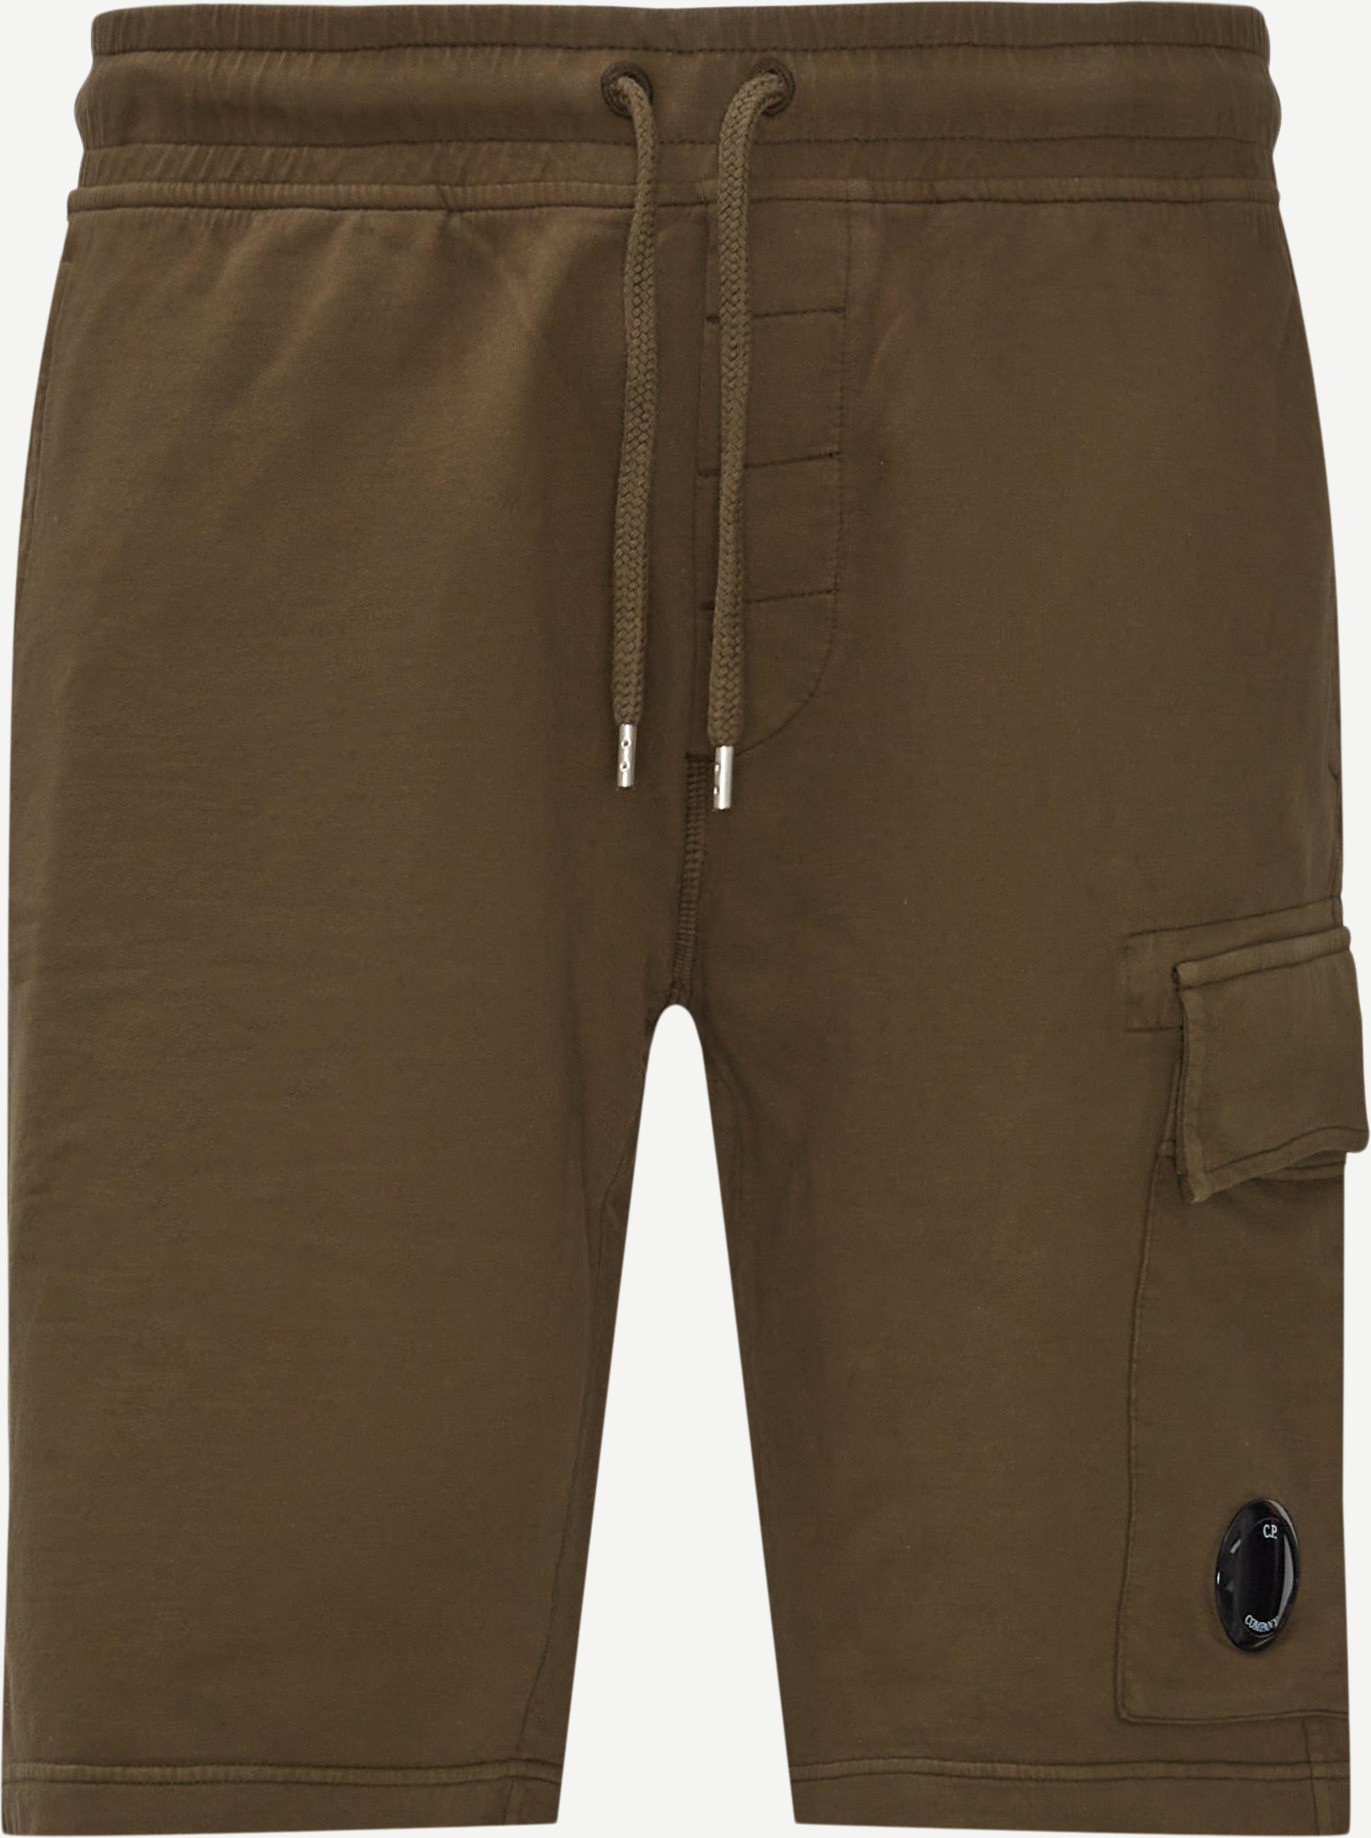 Sweat Bermuda Cargo Shorts - Shorts - Regular fit - Army